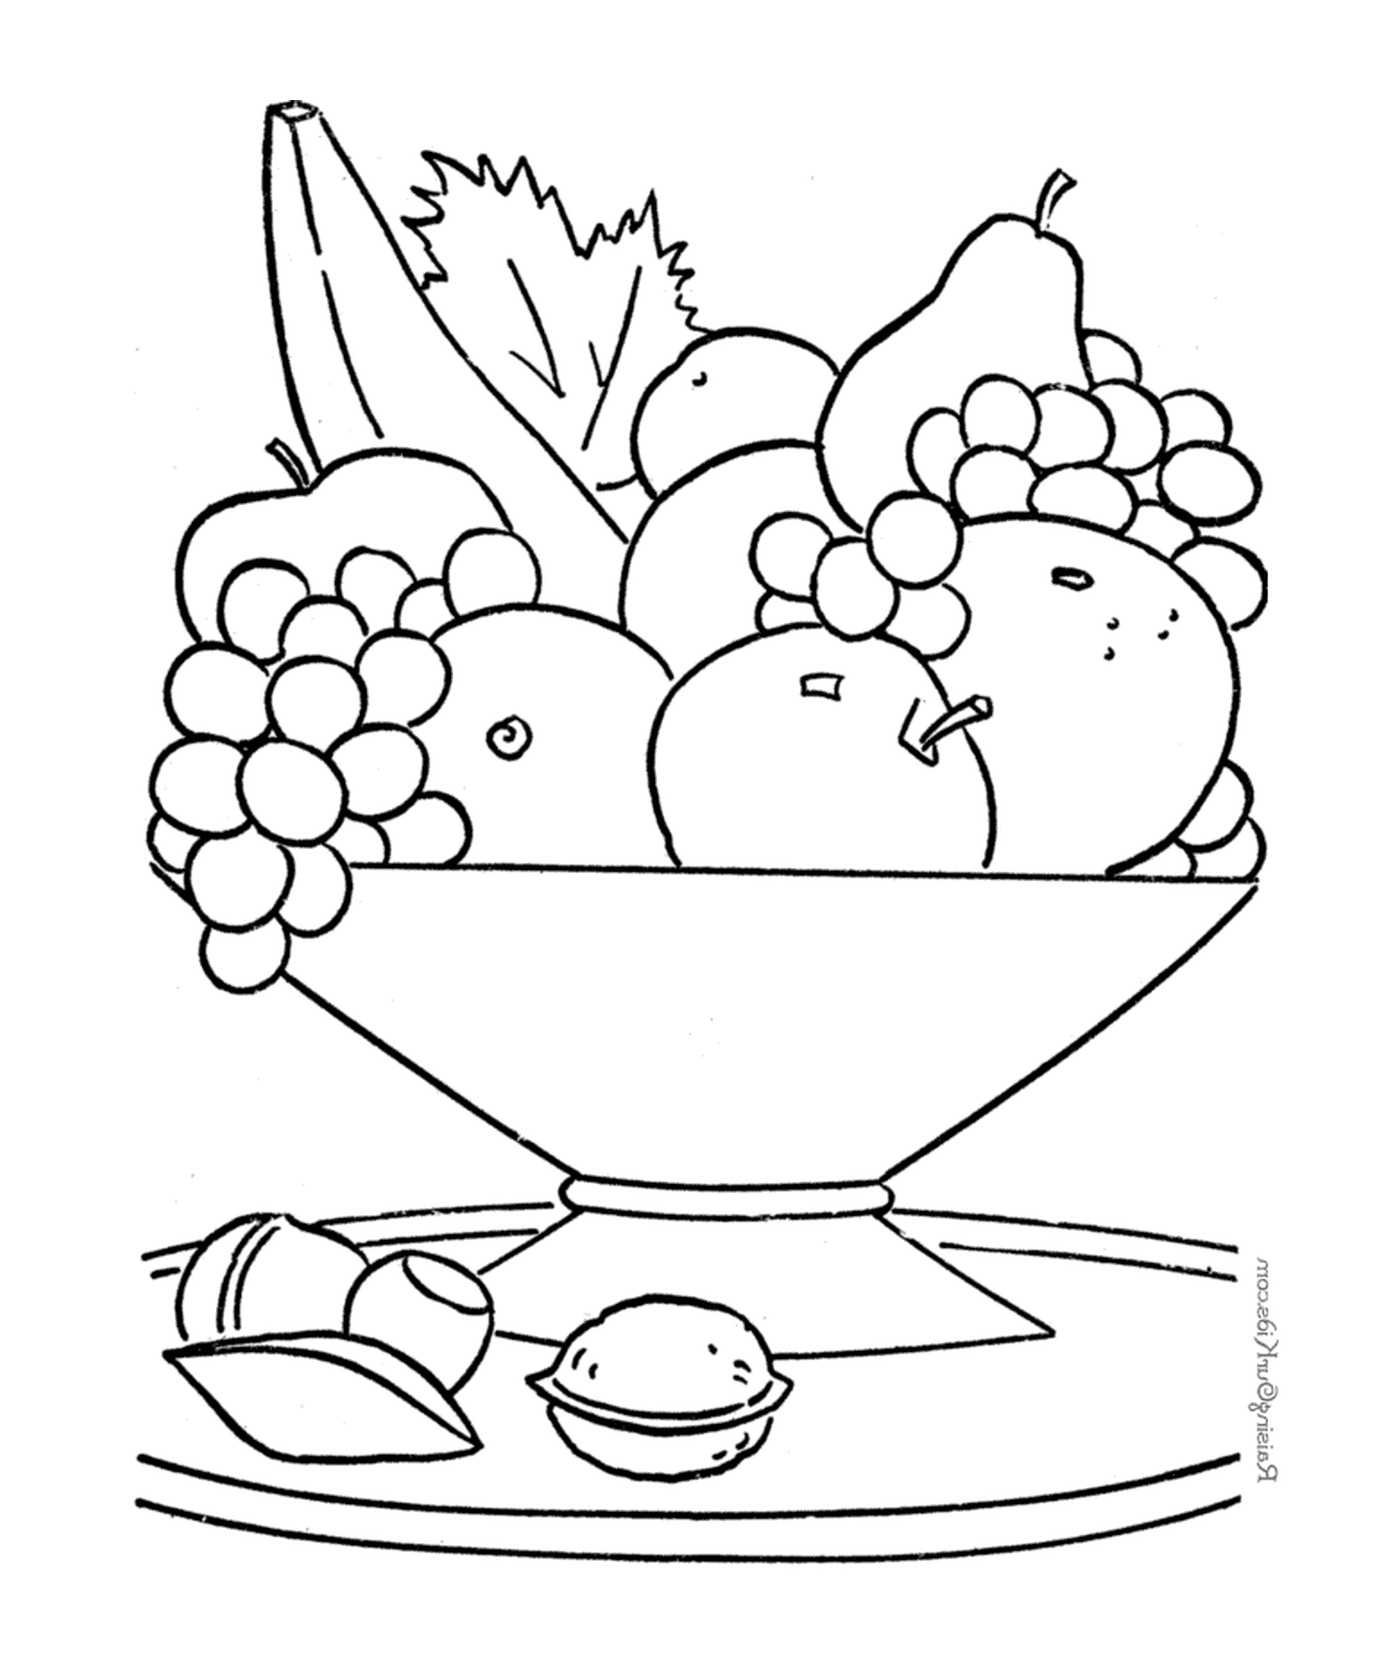  Juicy fruit bowl 